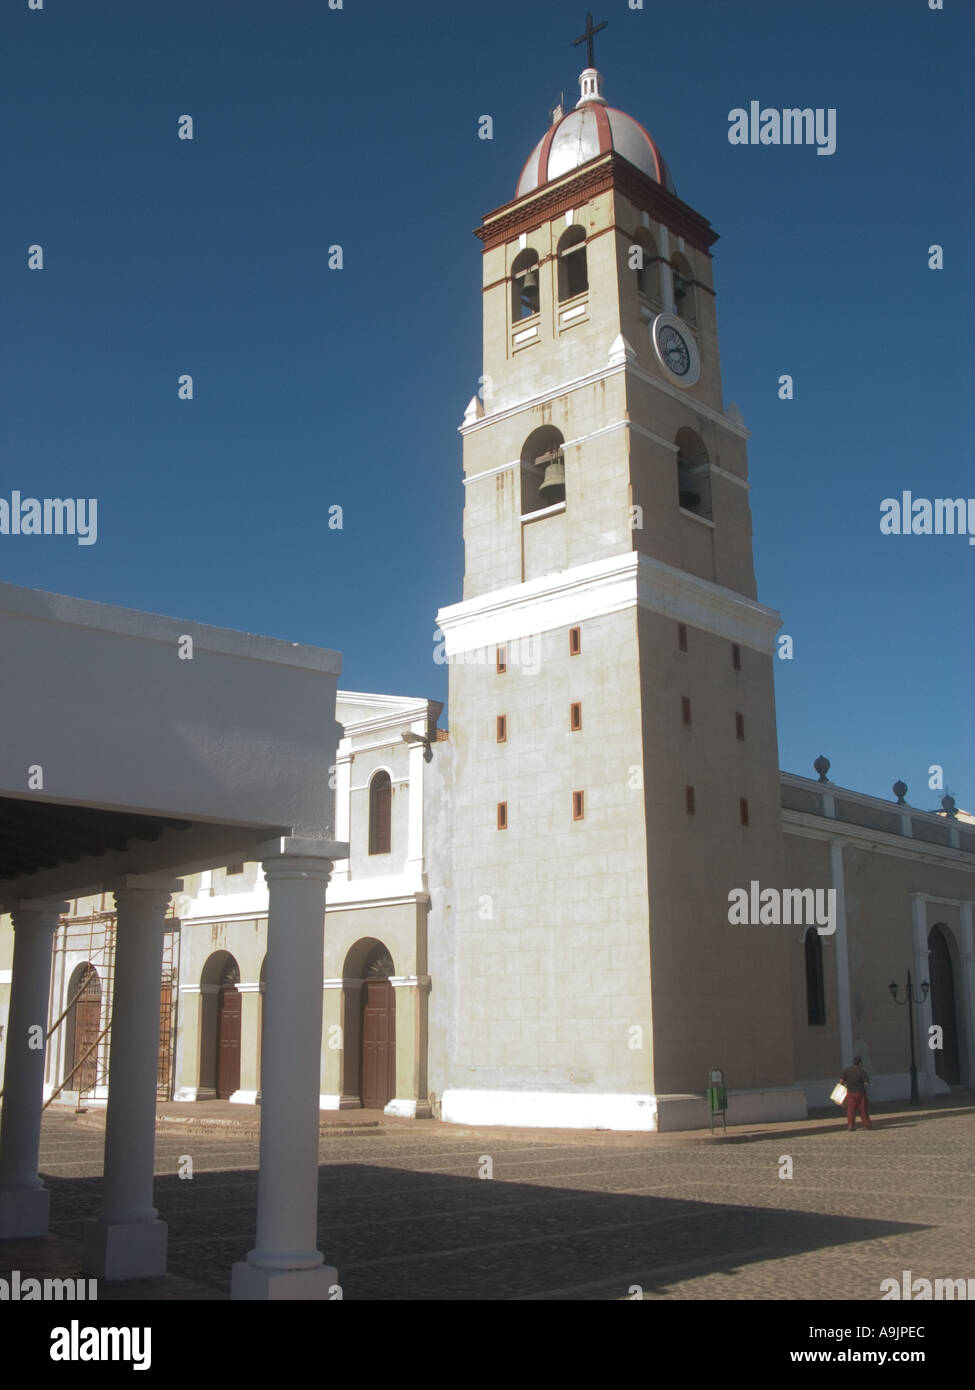 cuba eastern cuba bayamo torre de san juan evangelista church tower Stock Photo